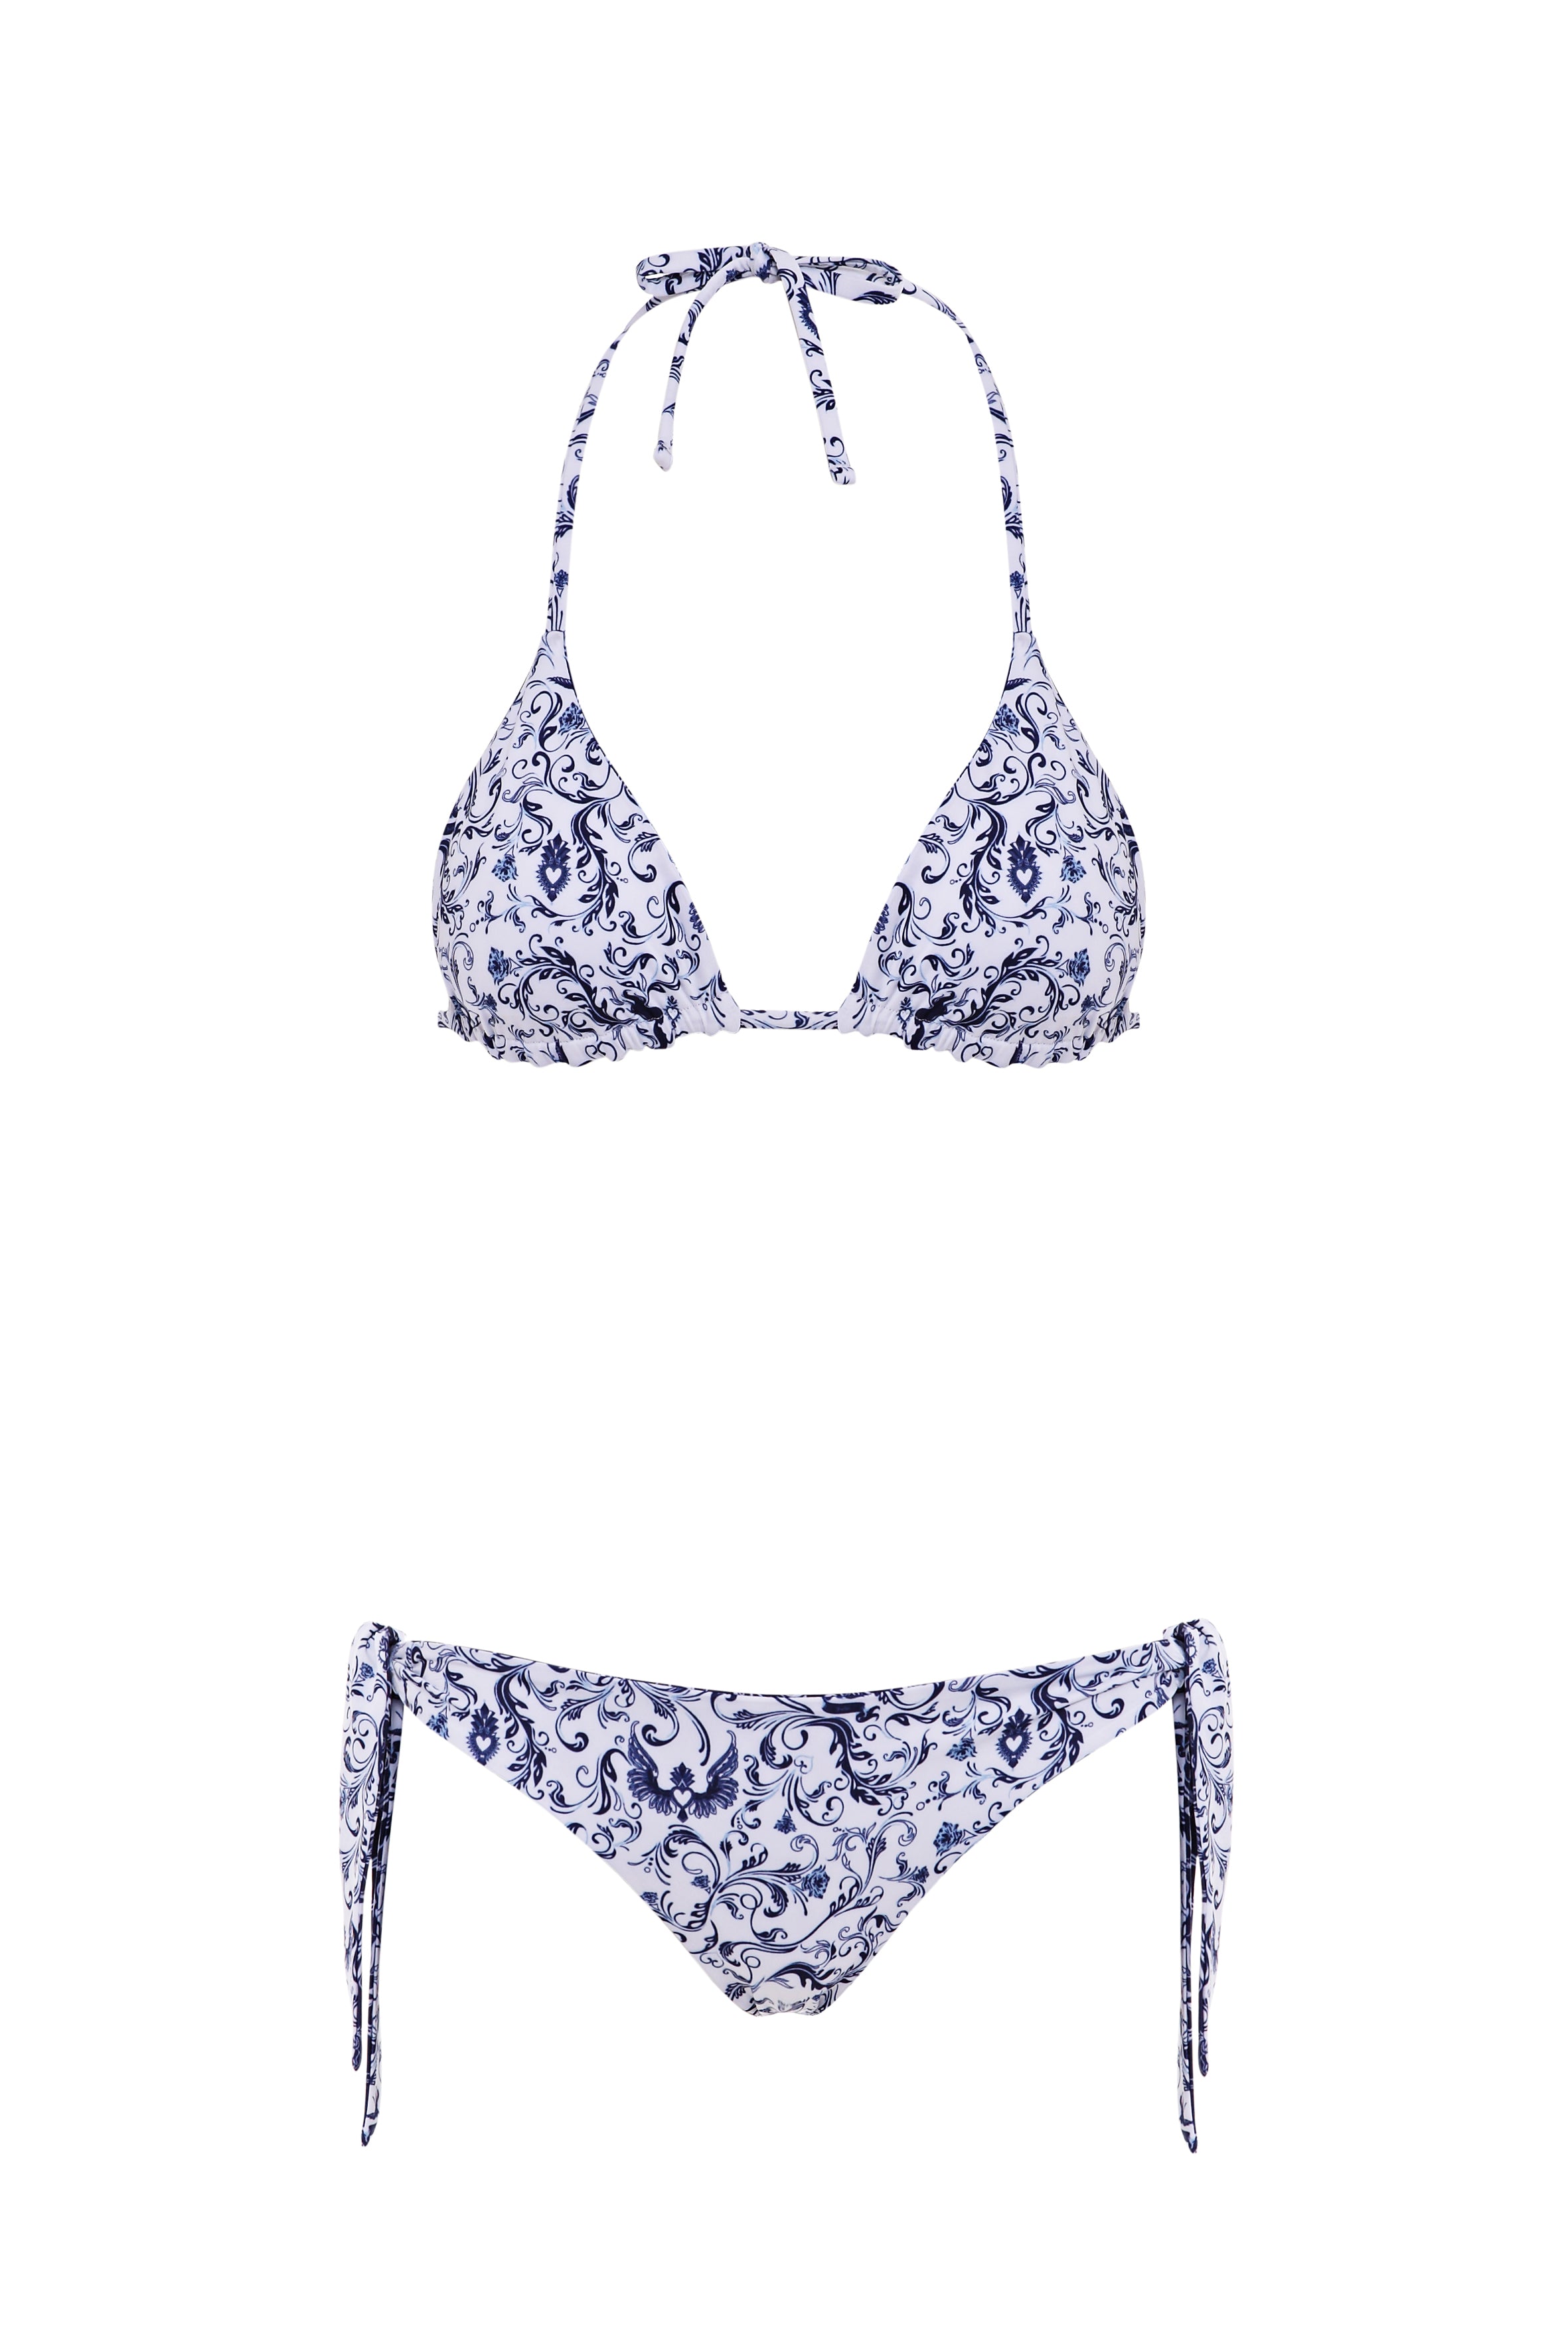 Paolita La Sirena Reversable Padded Bikini - White and Blue